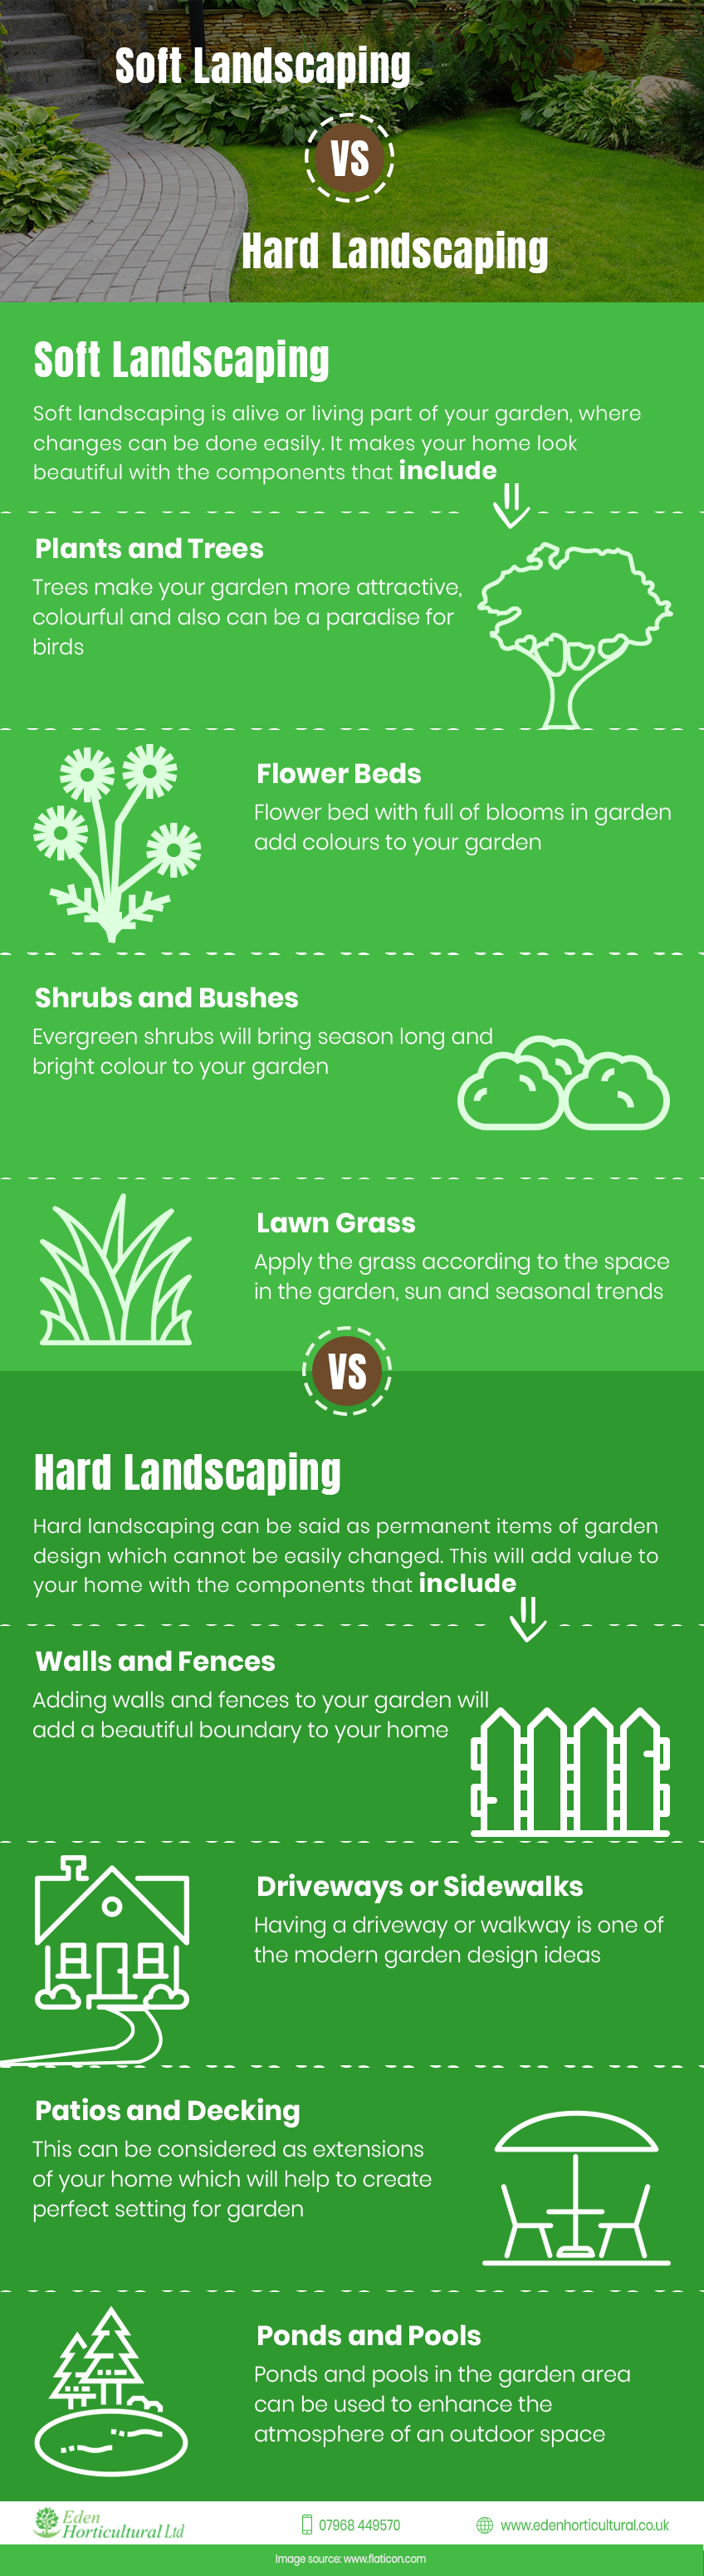 Softs-landscaping-vs-hard-landscaping